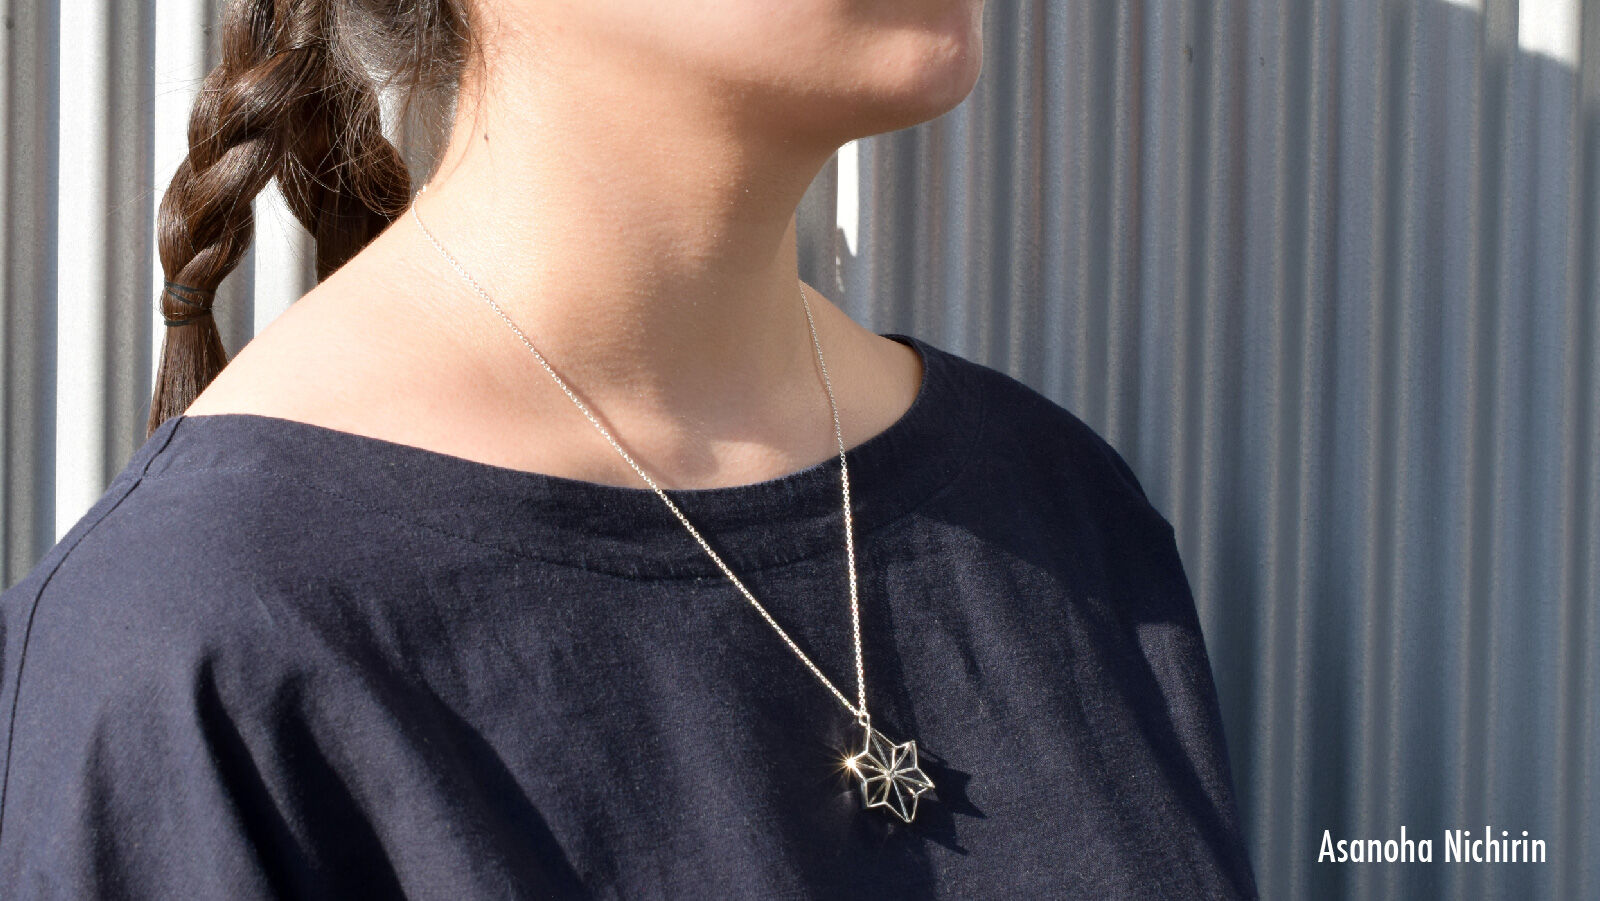 Japanese Platinum Necklace Chain for Women JL PT CH 192